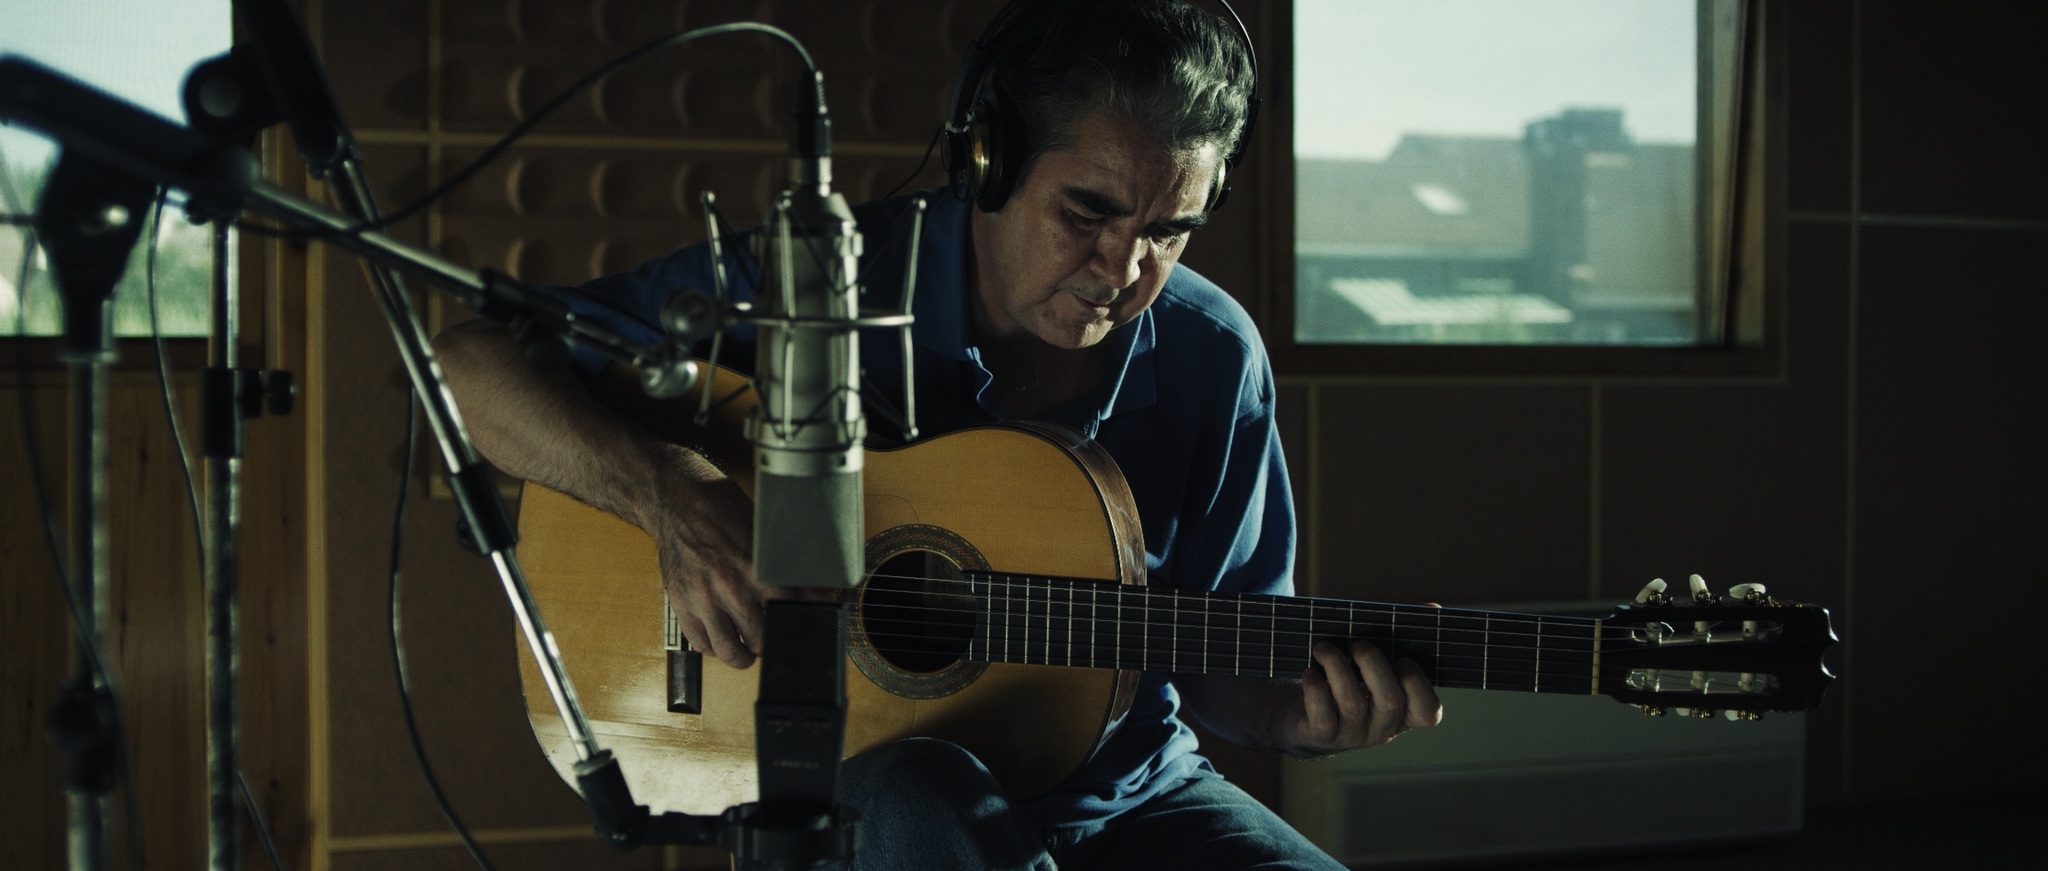 La biografía musical del guitarrista flamenco Rafael Riqueni está programado en Panorama andaluz.